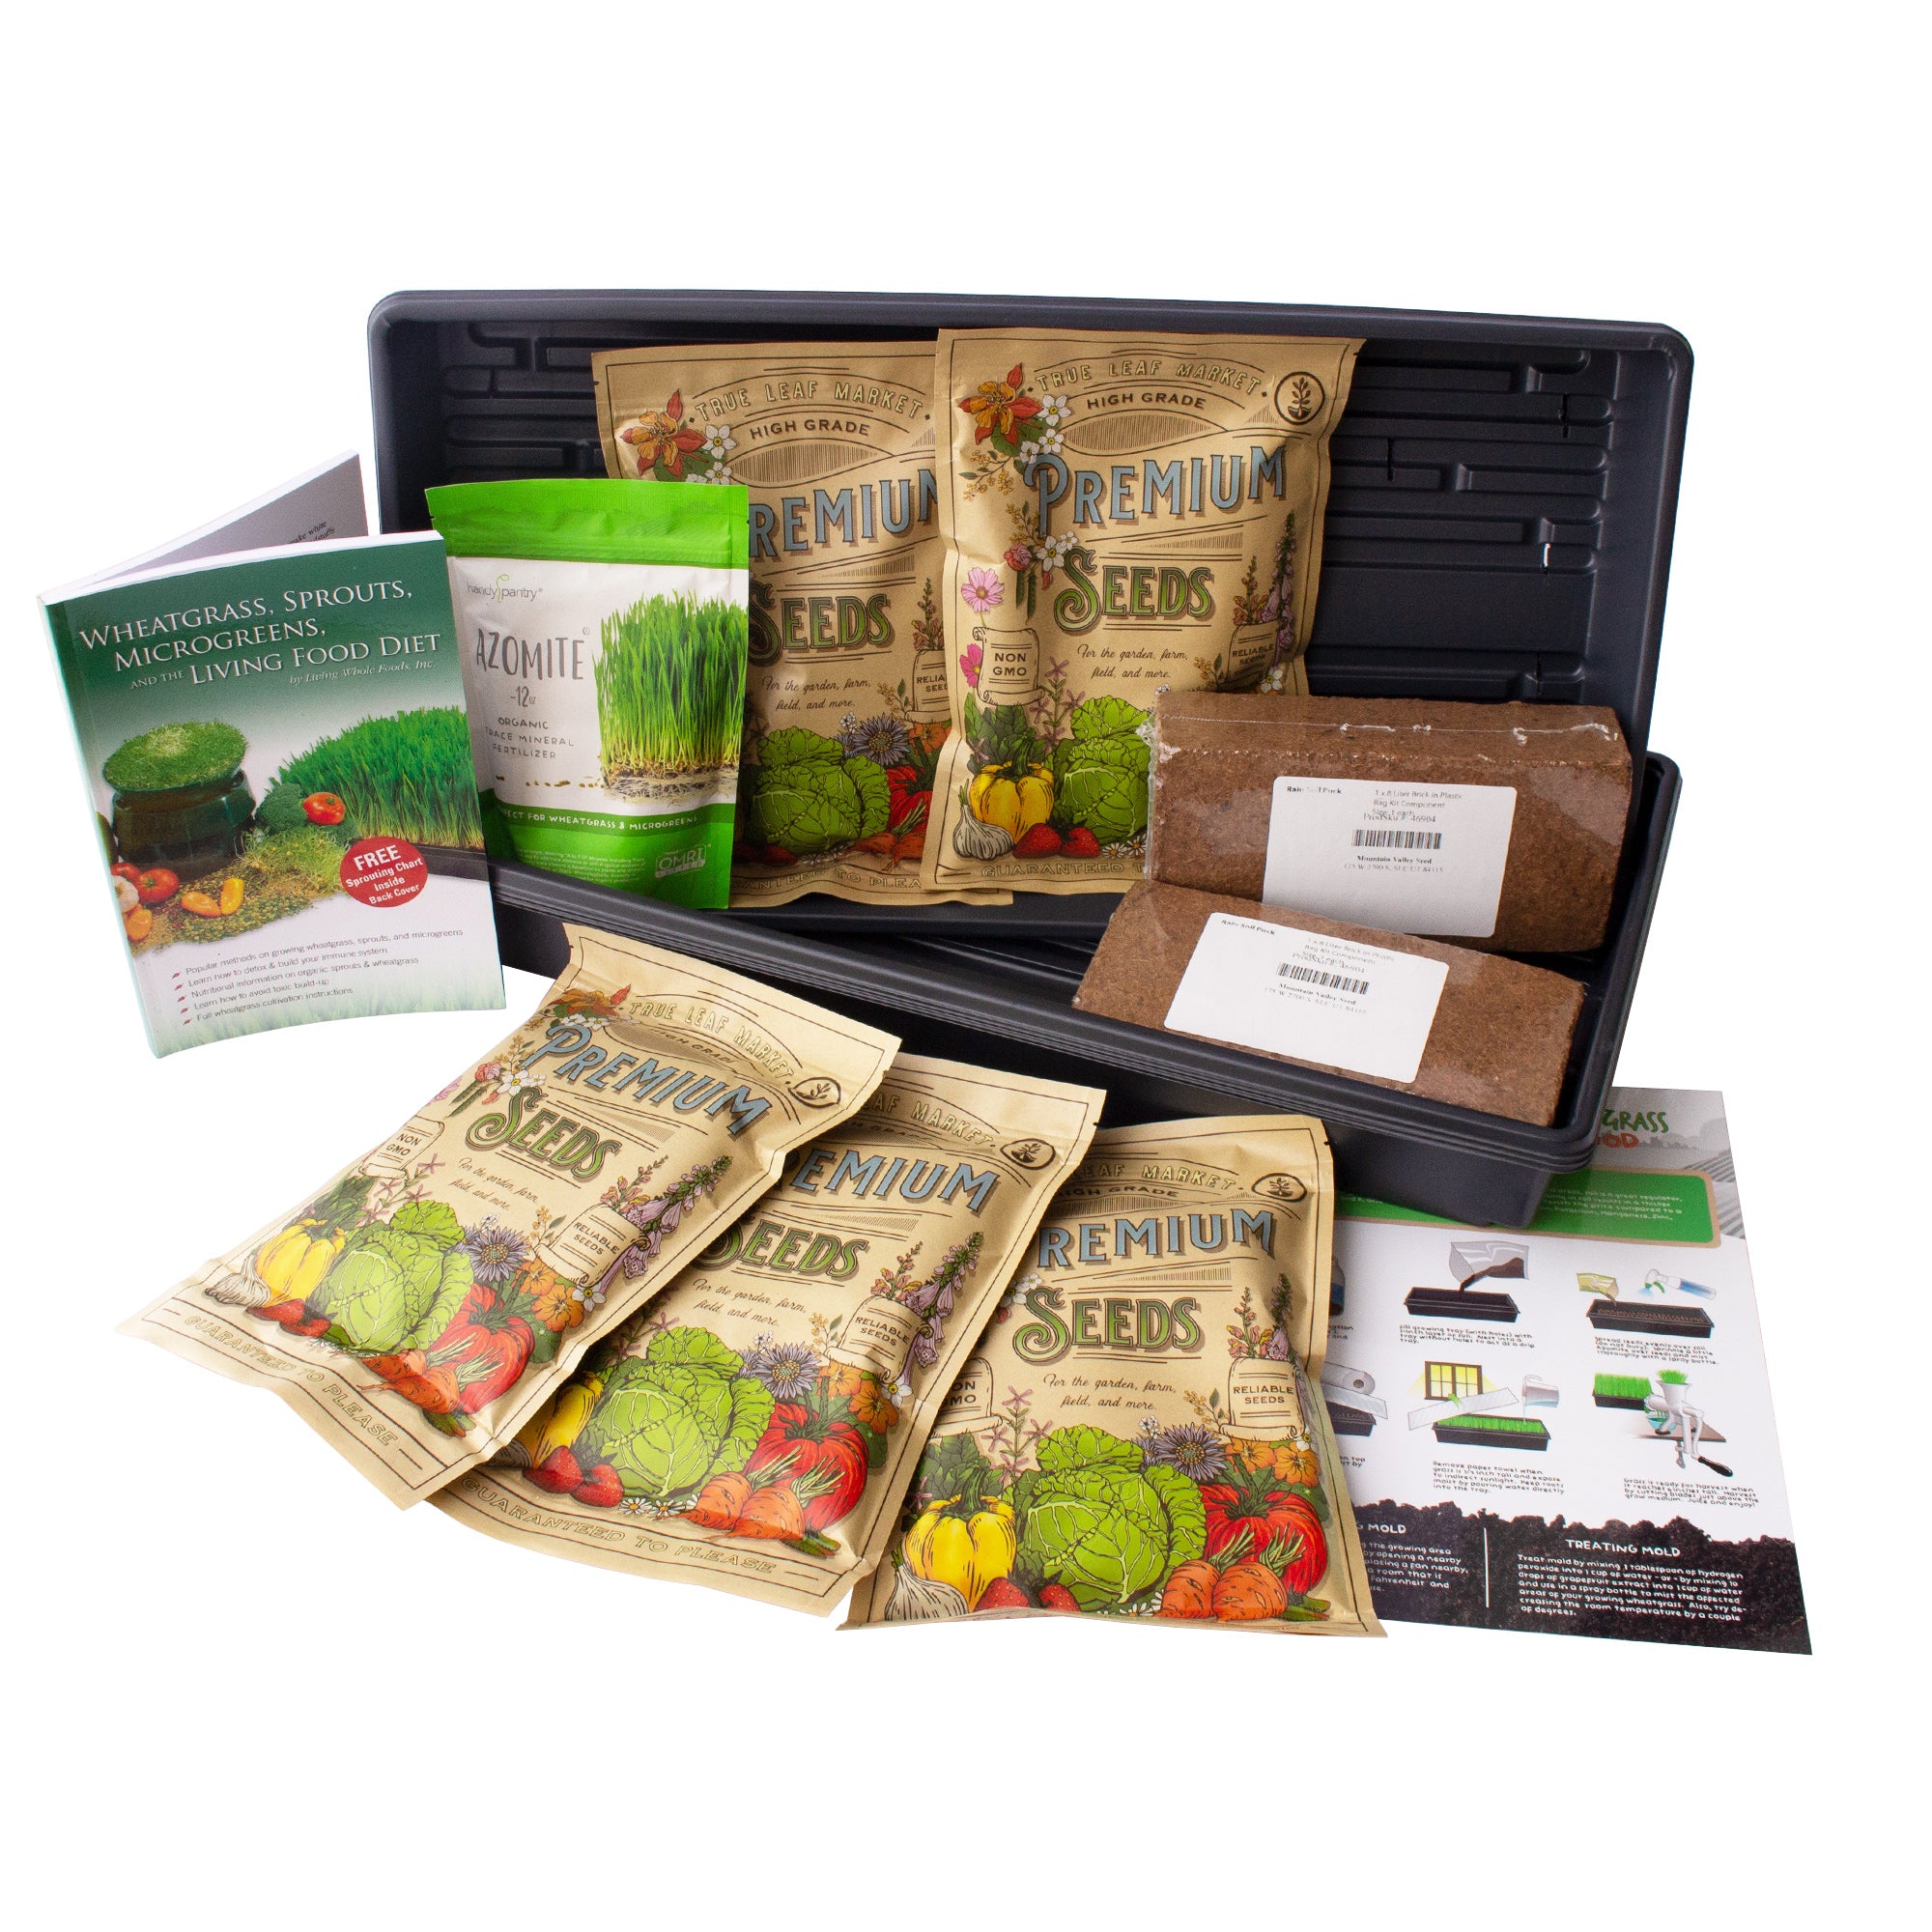 The Organic Wheatgrass Kit